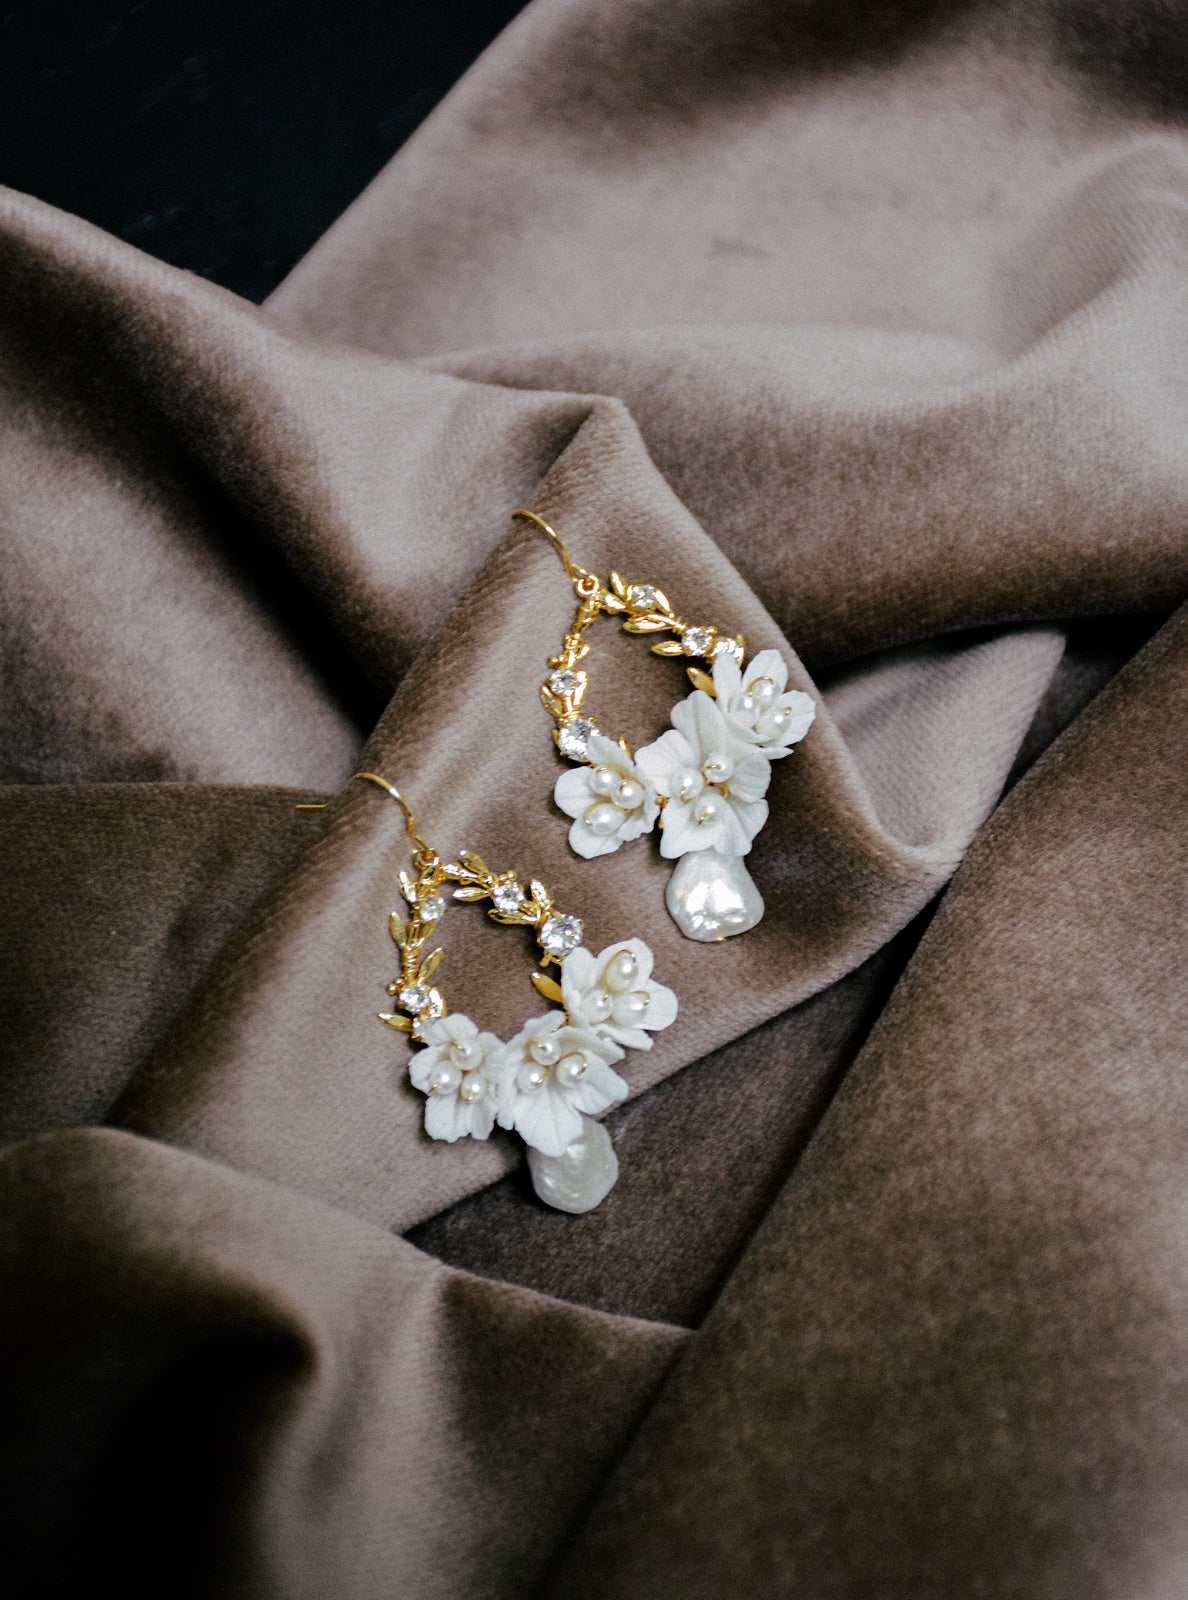 Gold bridal earrings - Simple Craft Idea